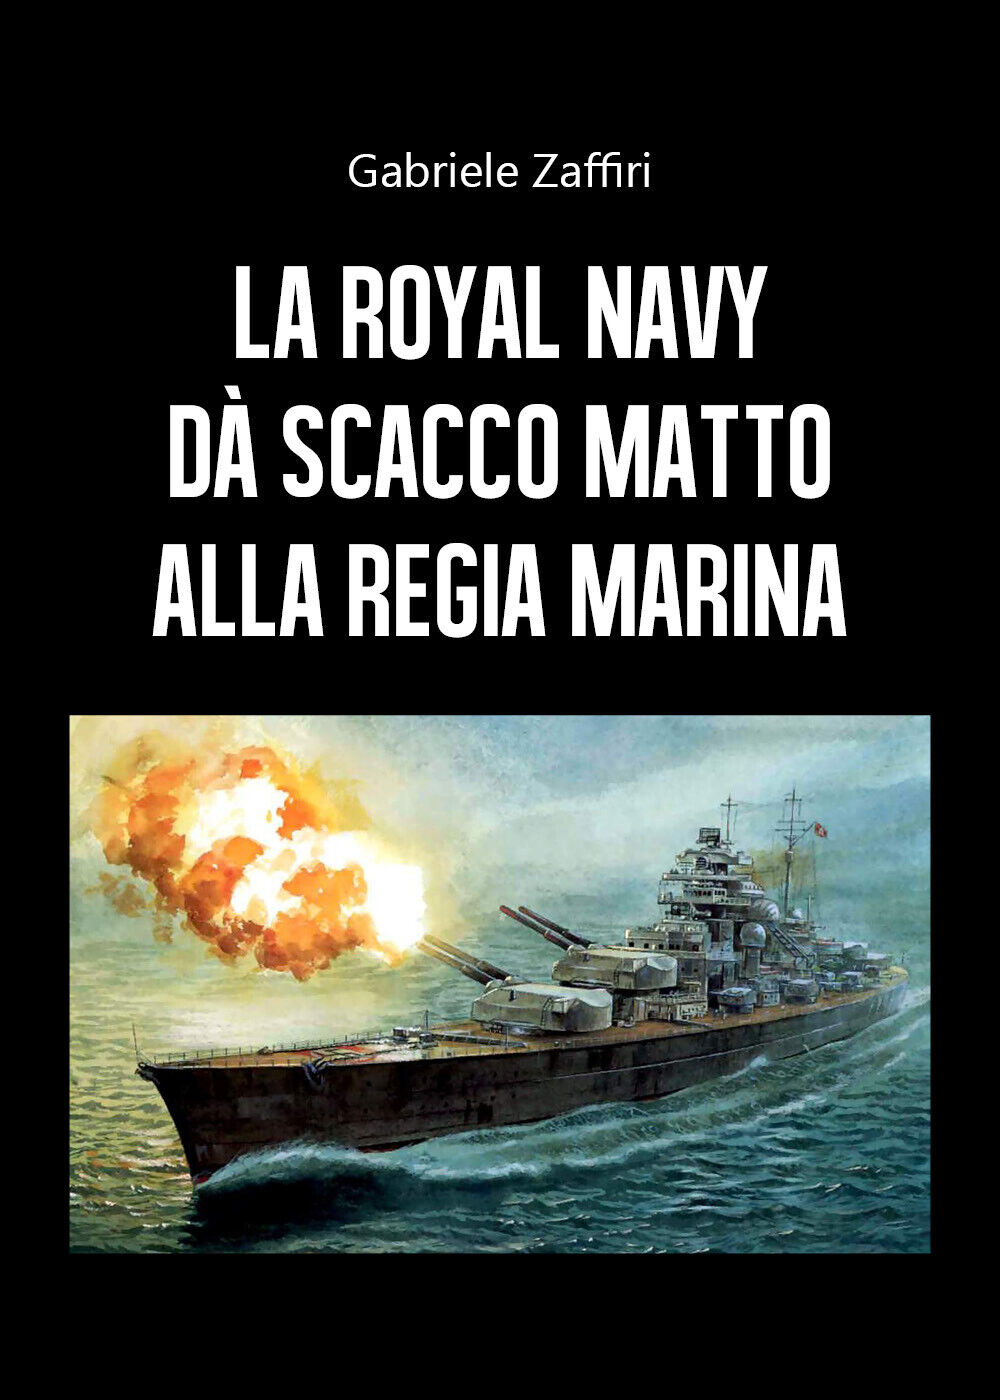 La Royal Navy d? scacco matto alla Regia Marina di Gabriele Zaffiri,  2020,  You